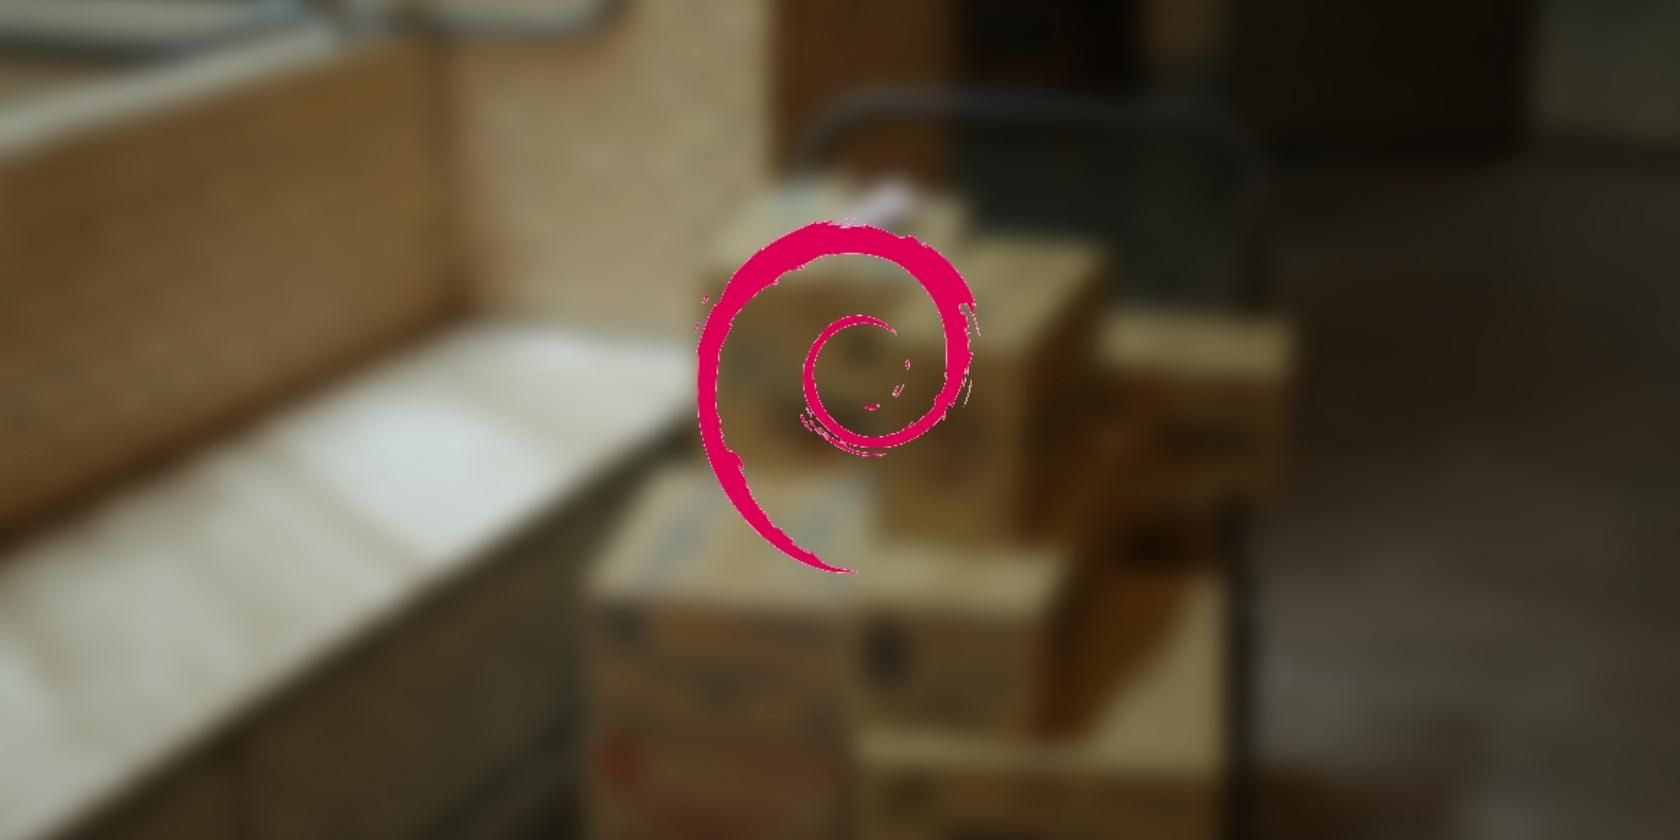 debian logo on a blurred background